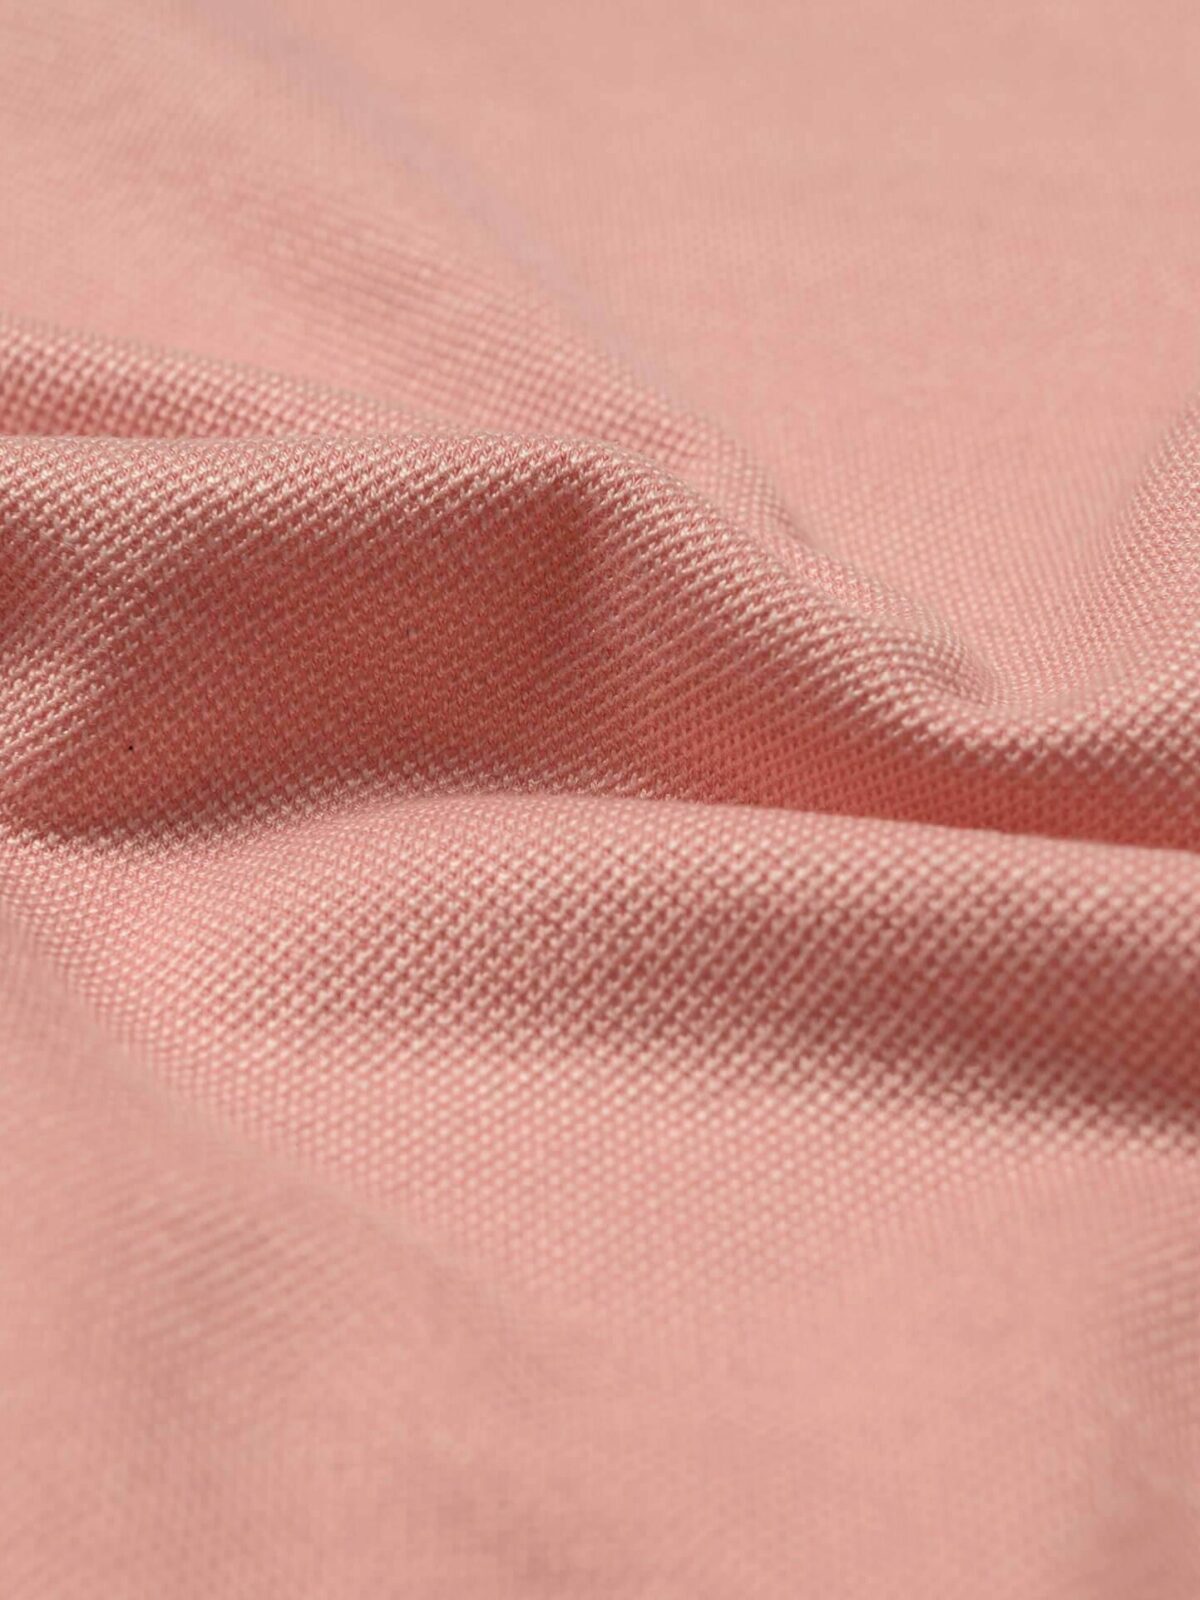 Carmel Peach Tencel and Cotton Knit Pique Shirts by Proper Cloth